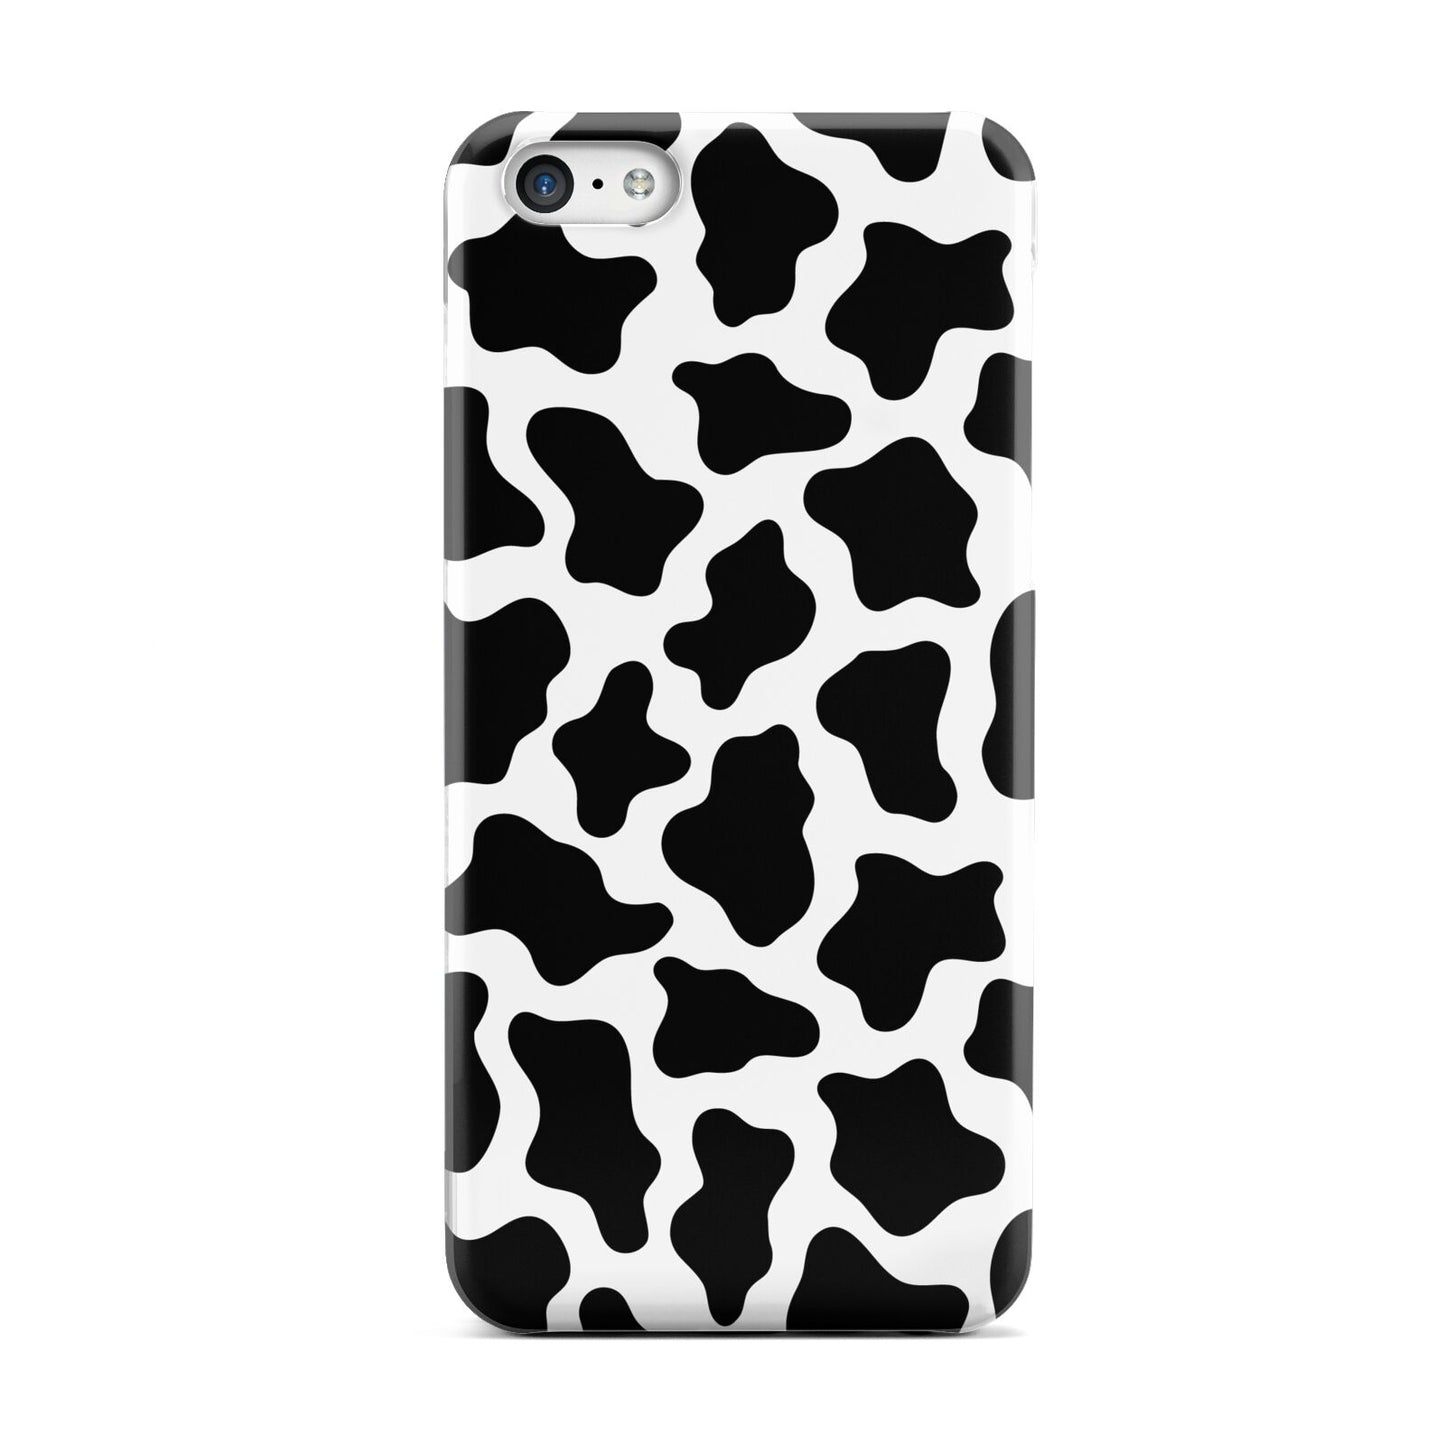 Cow Print Apple iPhone 5c Case